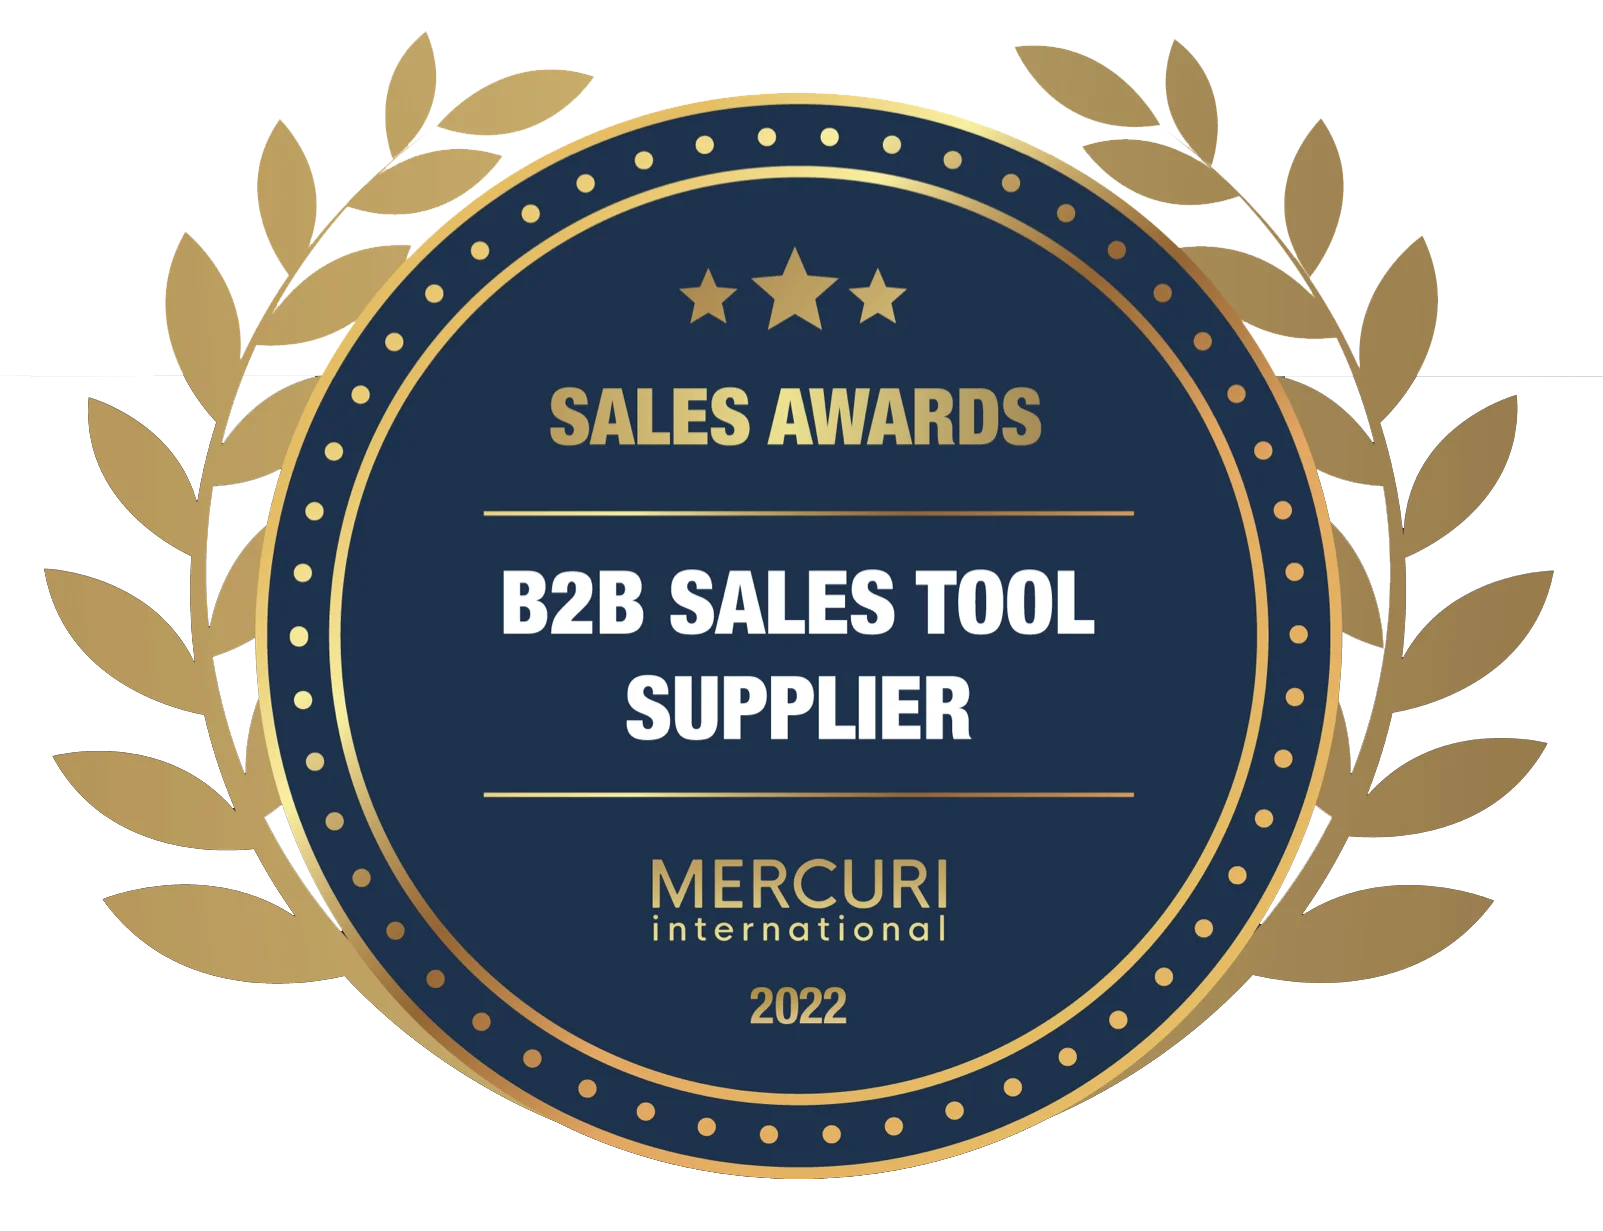 Meruri B2B Sales Tool Supplier